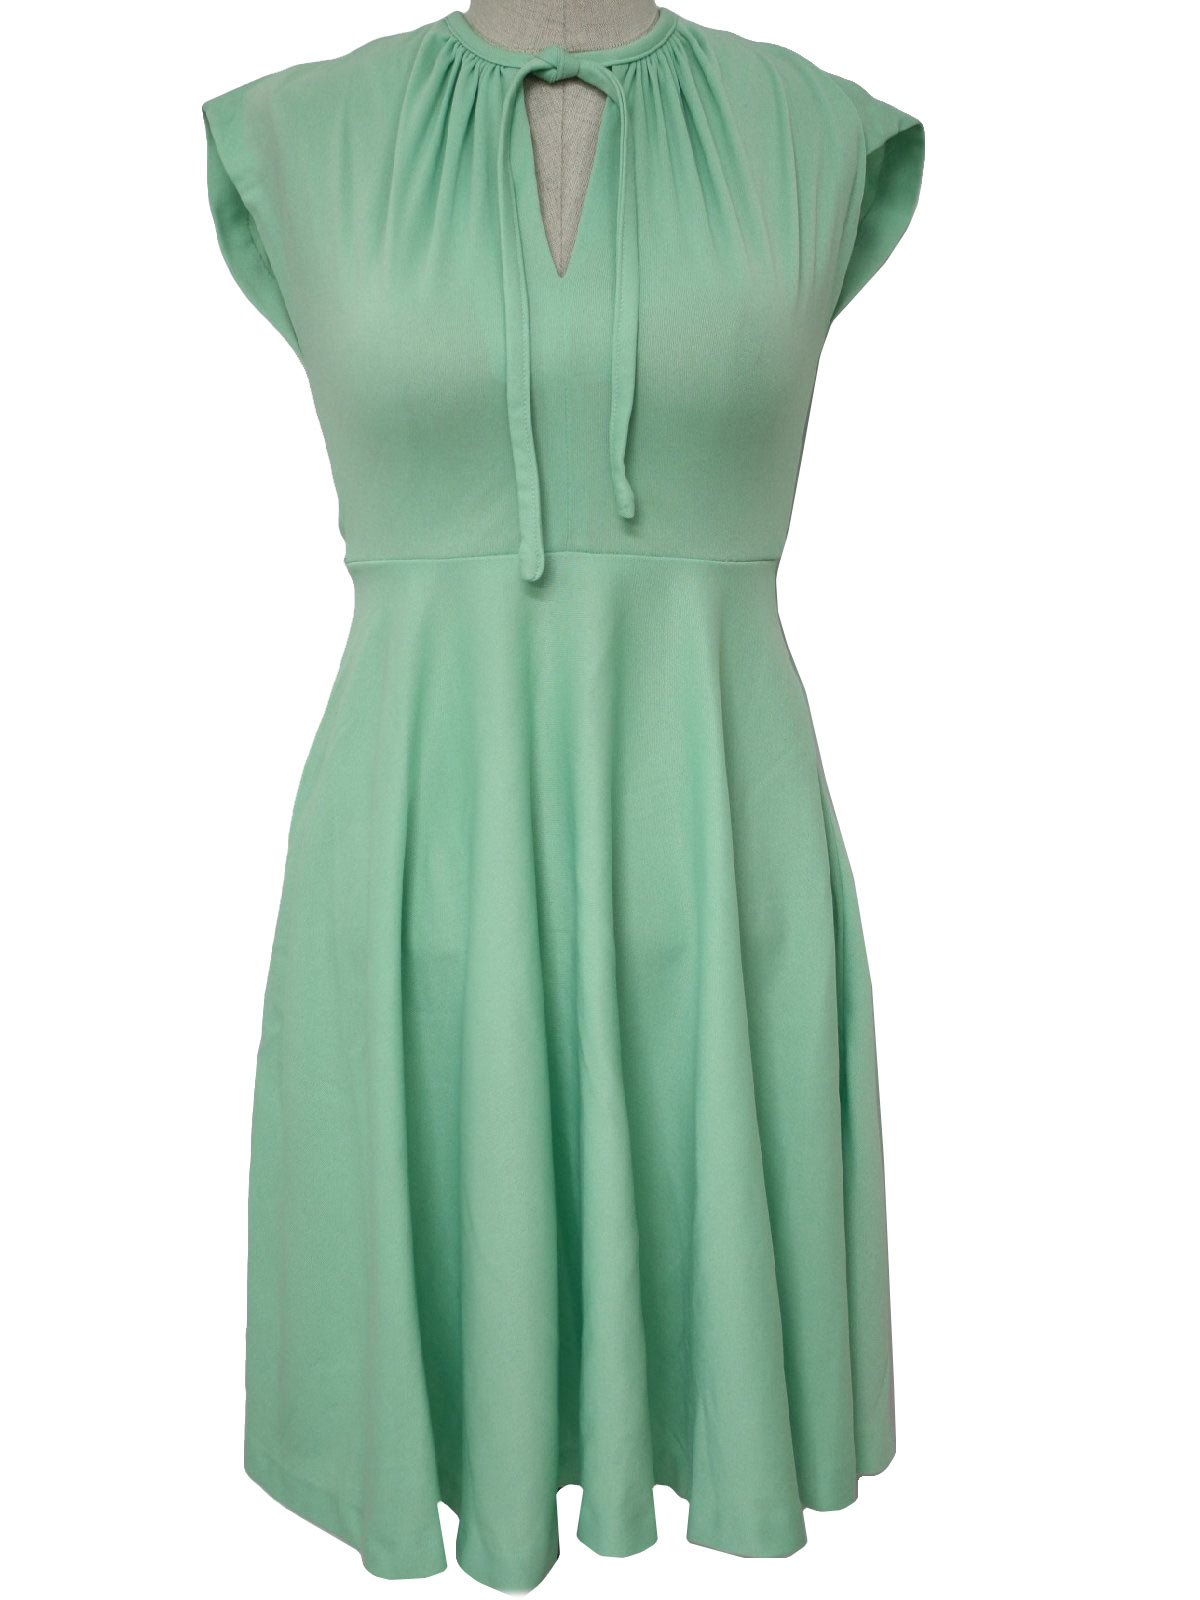 -Sears- Womens mint green, sleeveless, polyester stretch knit dress ...